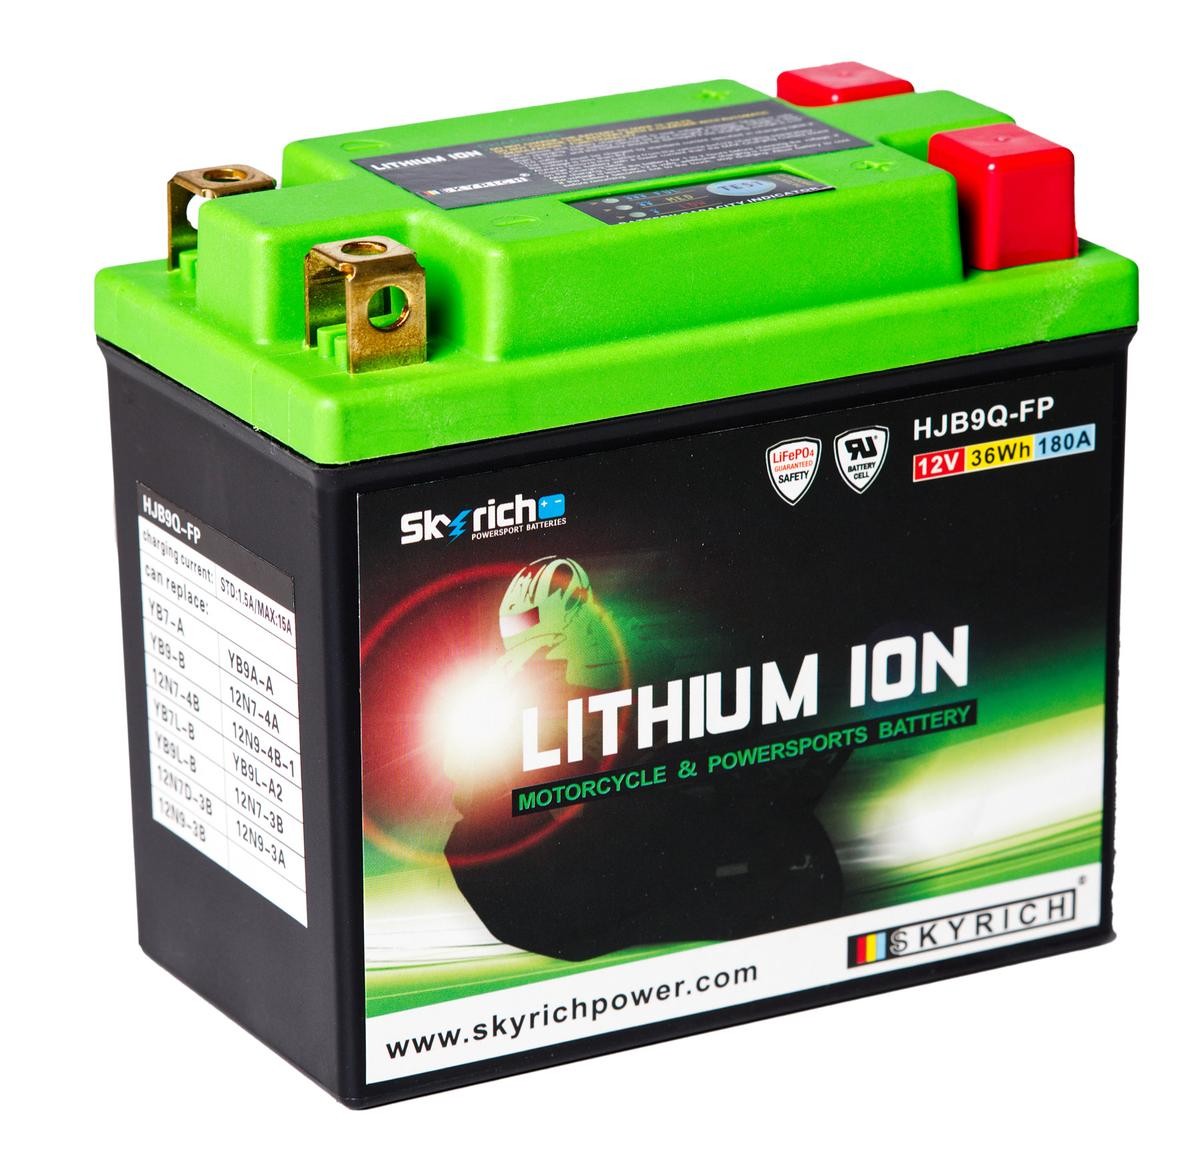 APRILIA RX Batterie 12V 3Ah 180A N Li-Ionen-Batterie SKYRICH LITHIUM ION HJB9Q-FP